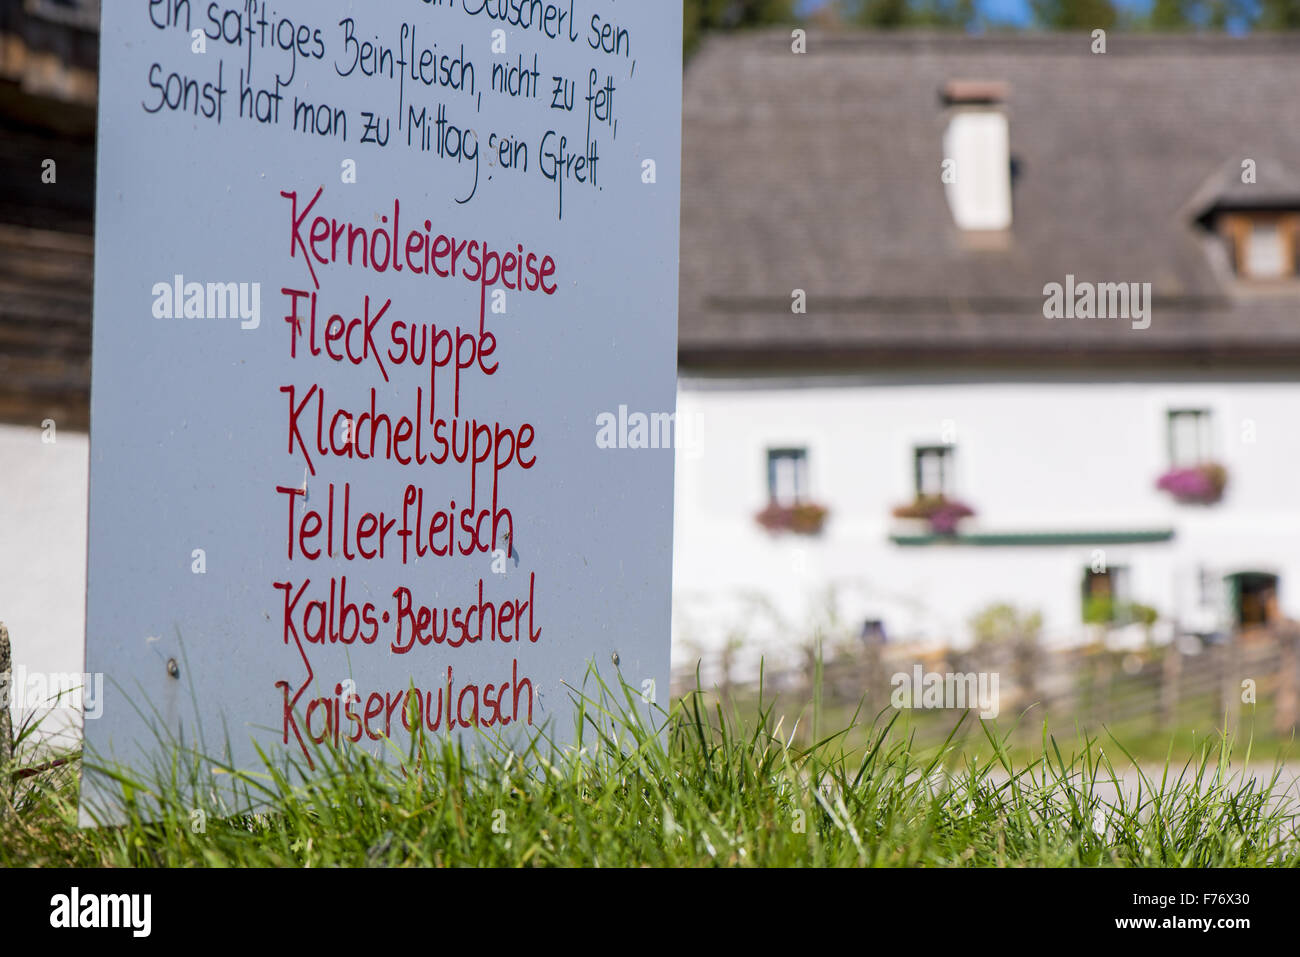 Gastronomy Steirereck Pogusch, Styria, Austria, Pogusch Stock Photo